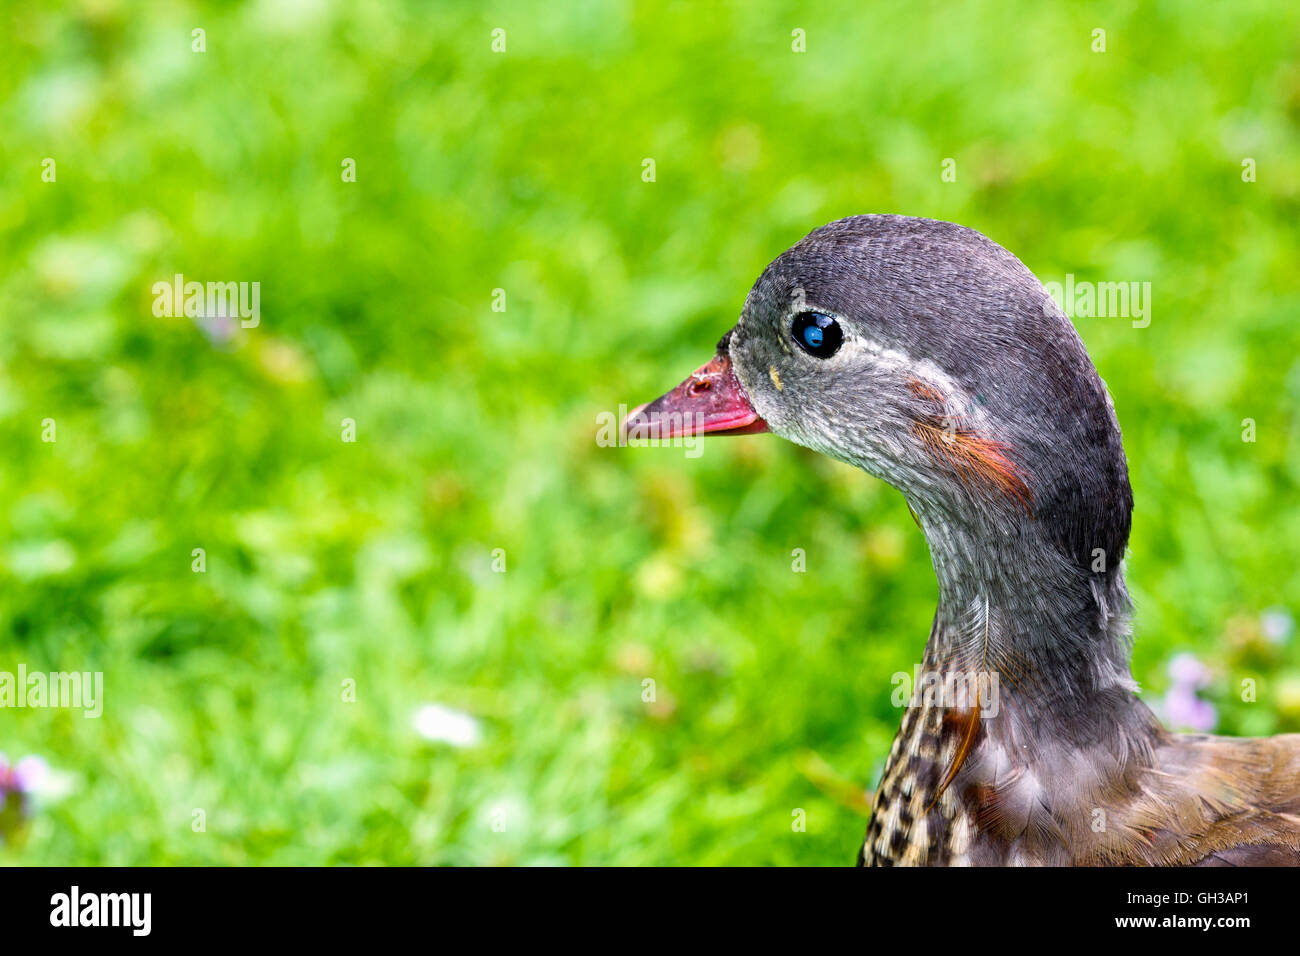 Male Mandarin duck (Aix galericulata) with cataracts Stock Photo